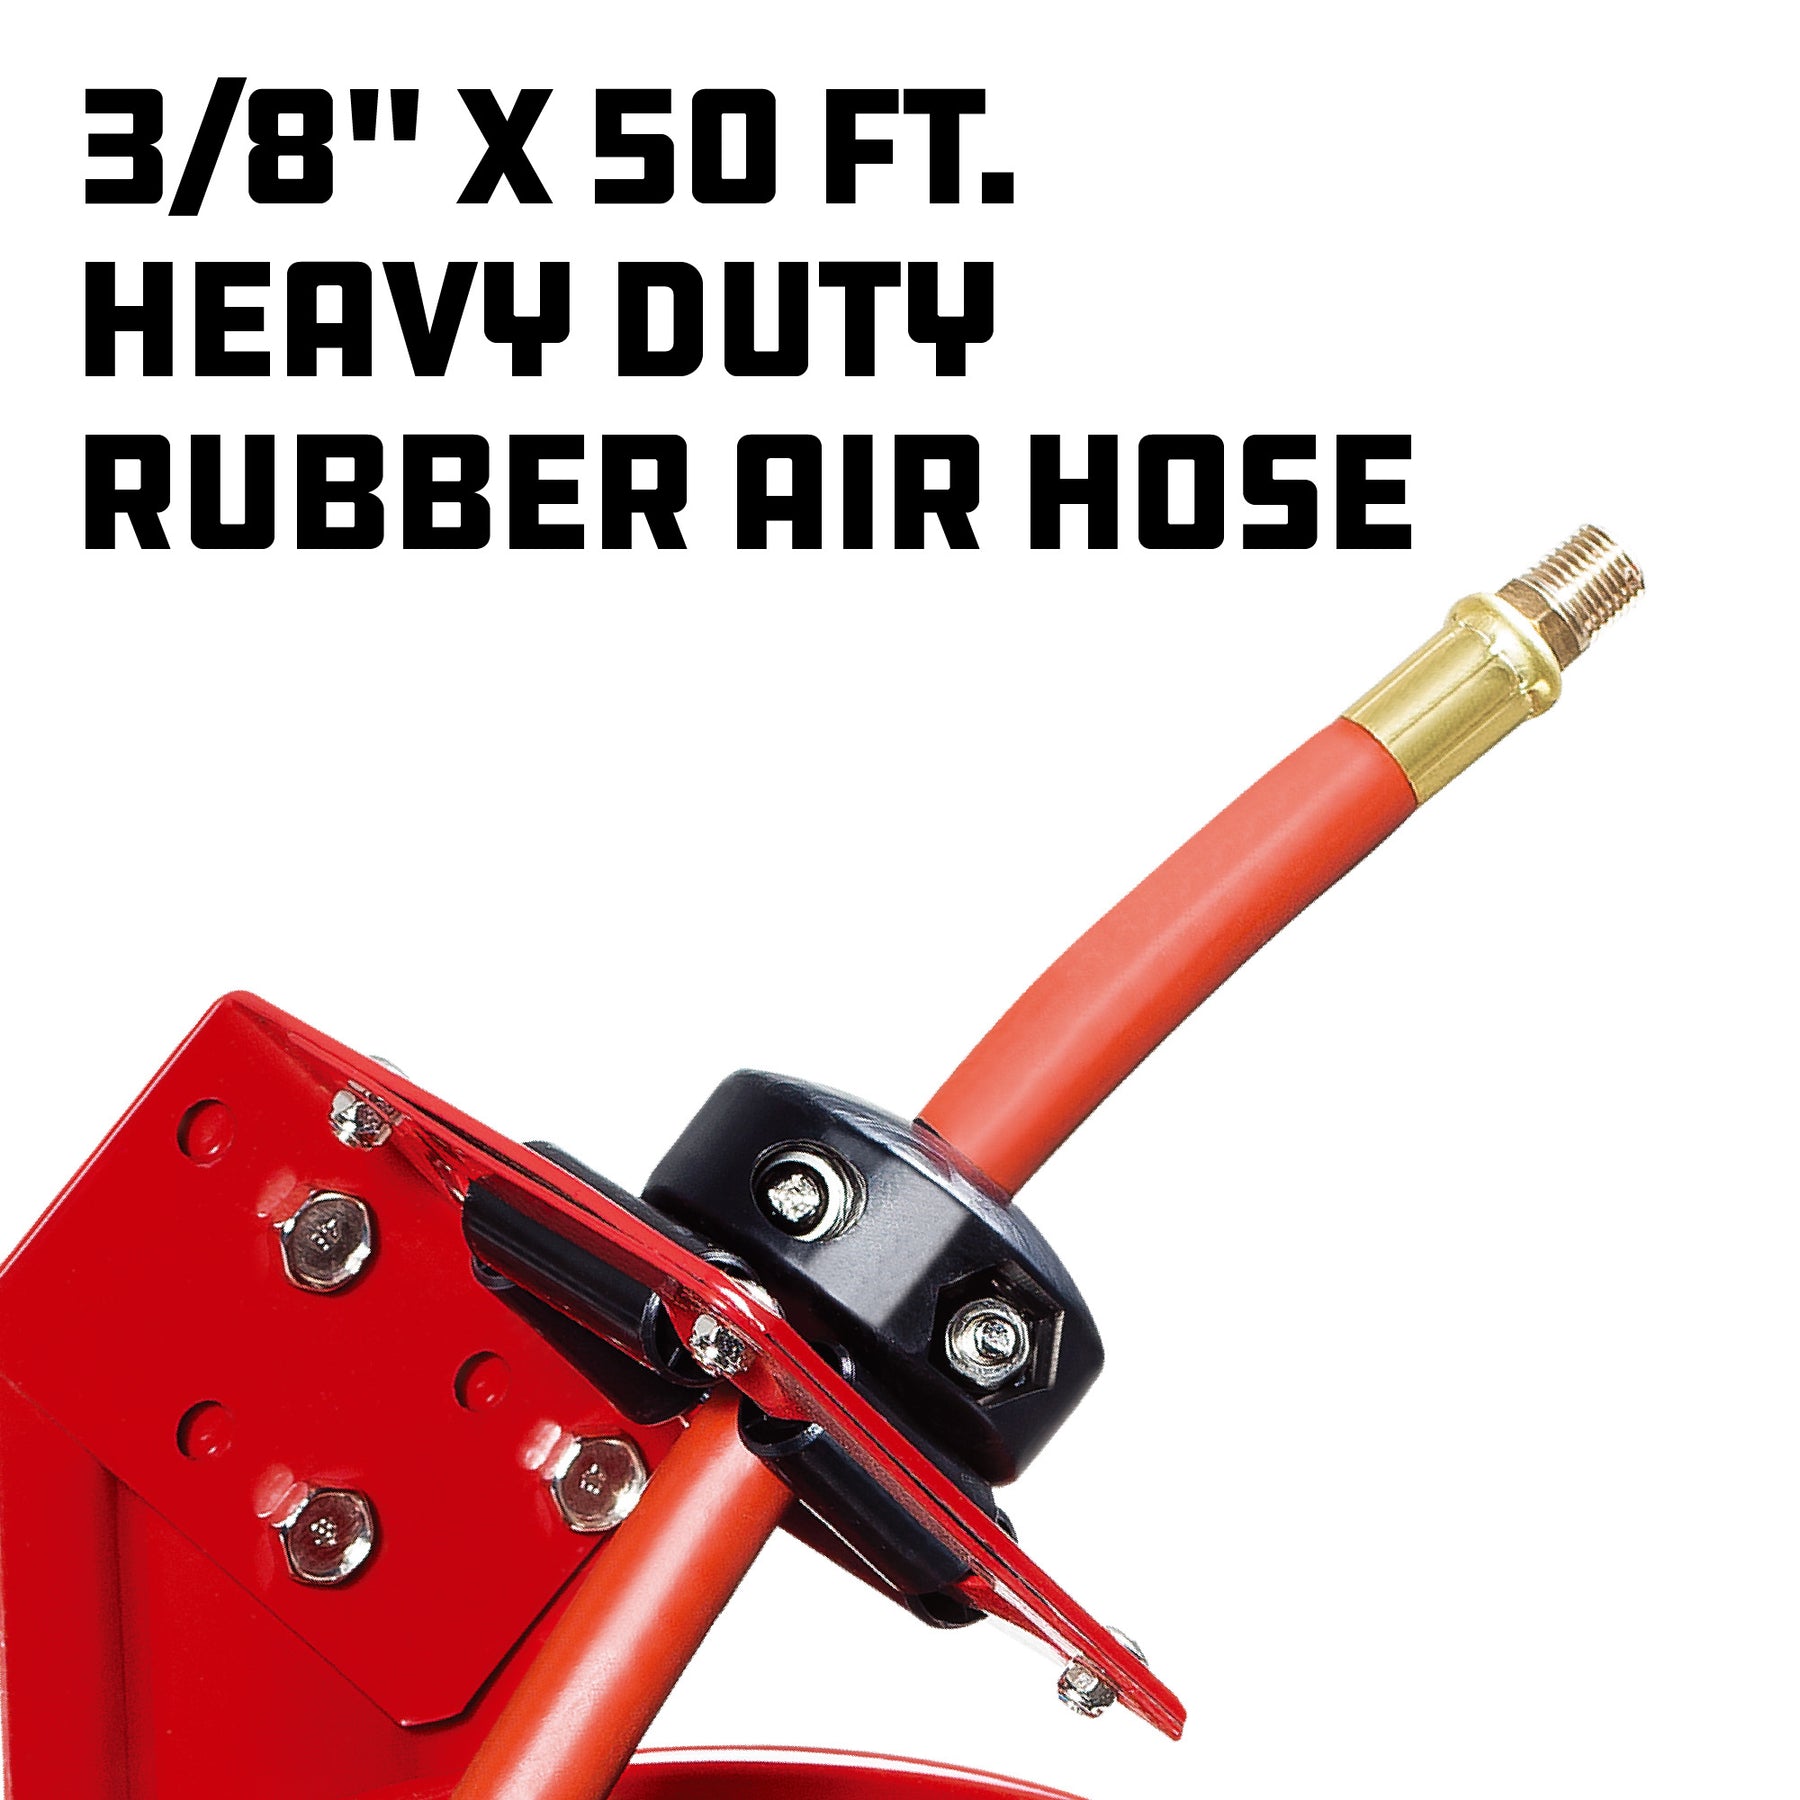 Powerbuilt Heavy Duty Auto Retract Air Hose Reel with 3/8 x 50' Hose - 642228